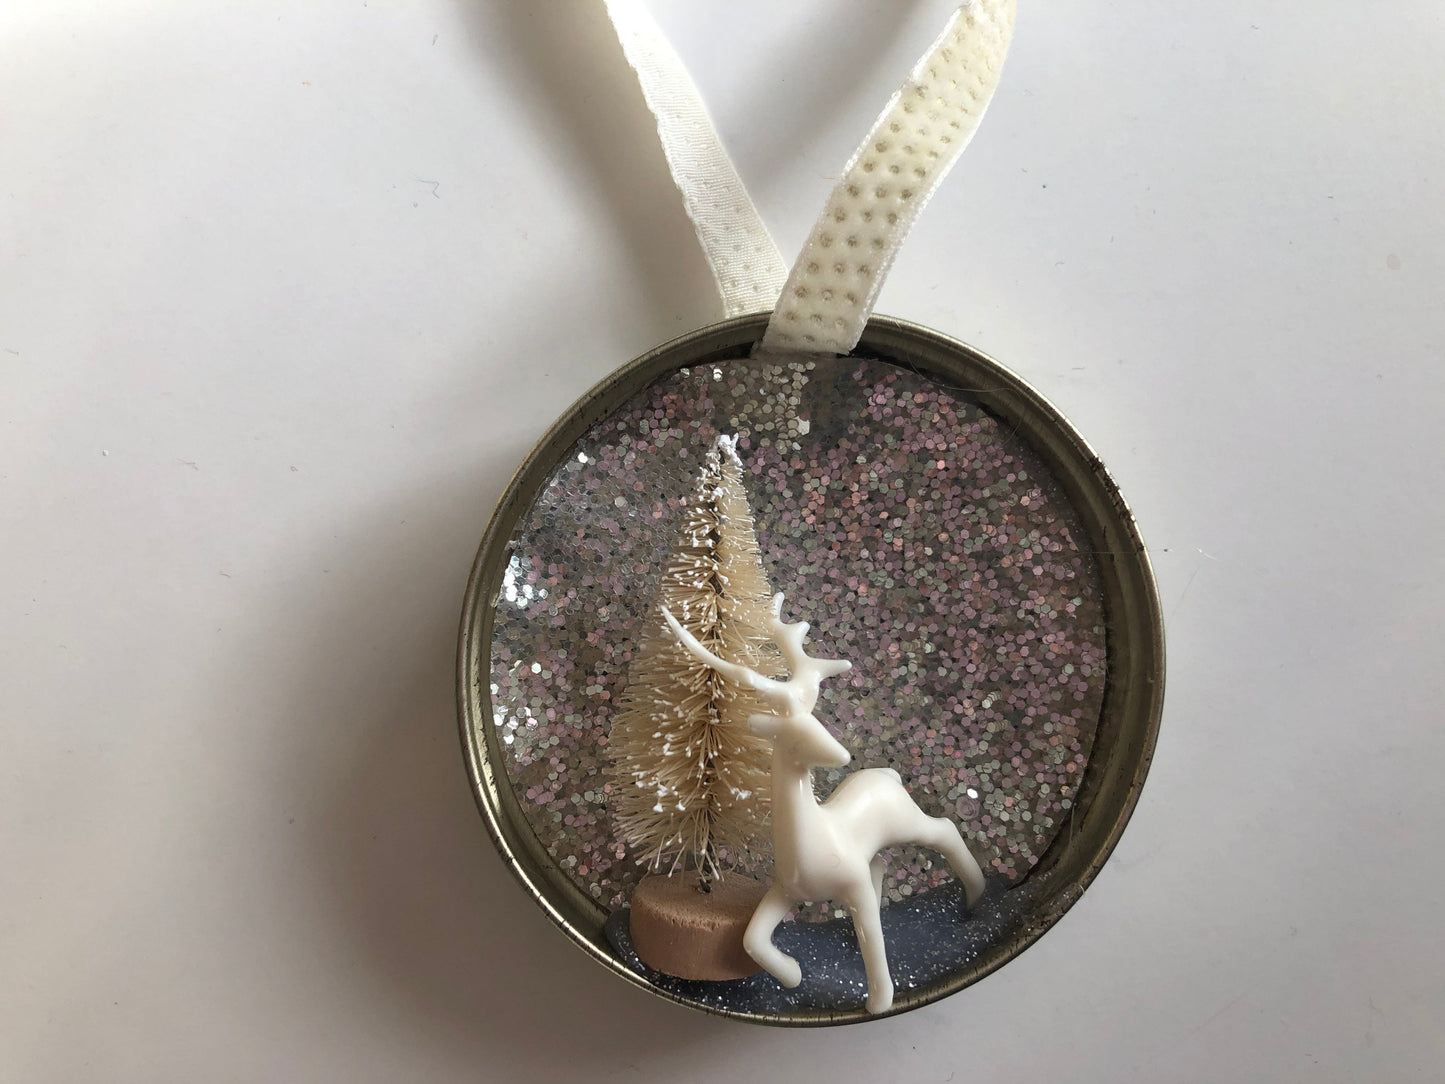 Deer Themed Christmas Ornament in Mason Jar Ring